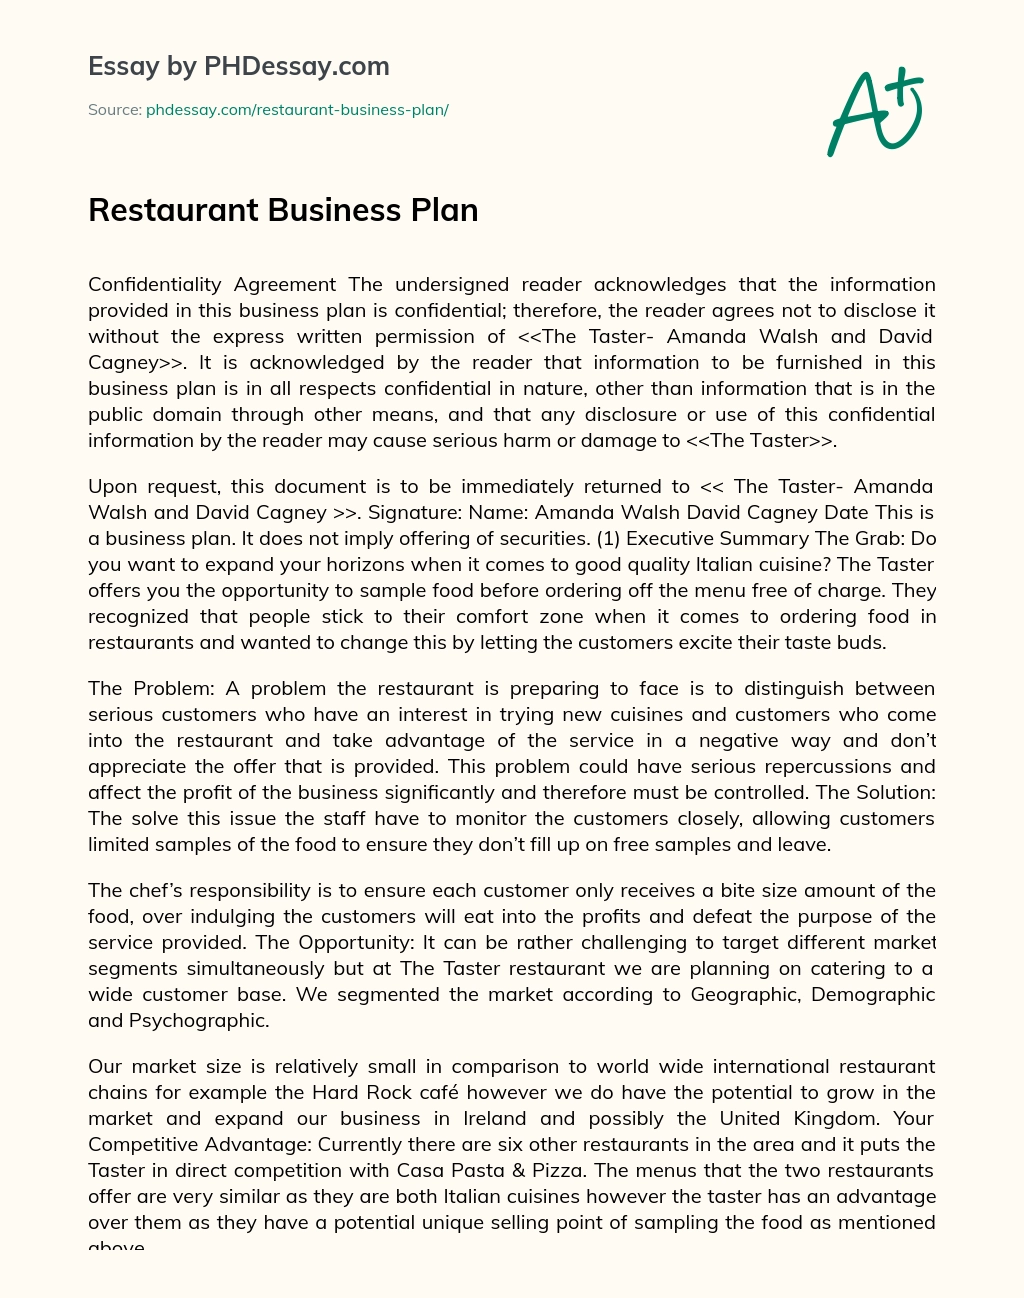 Restaurant Business Plan essay